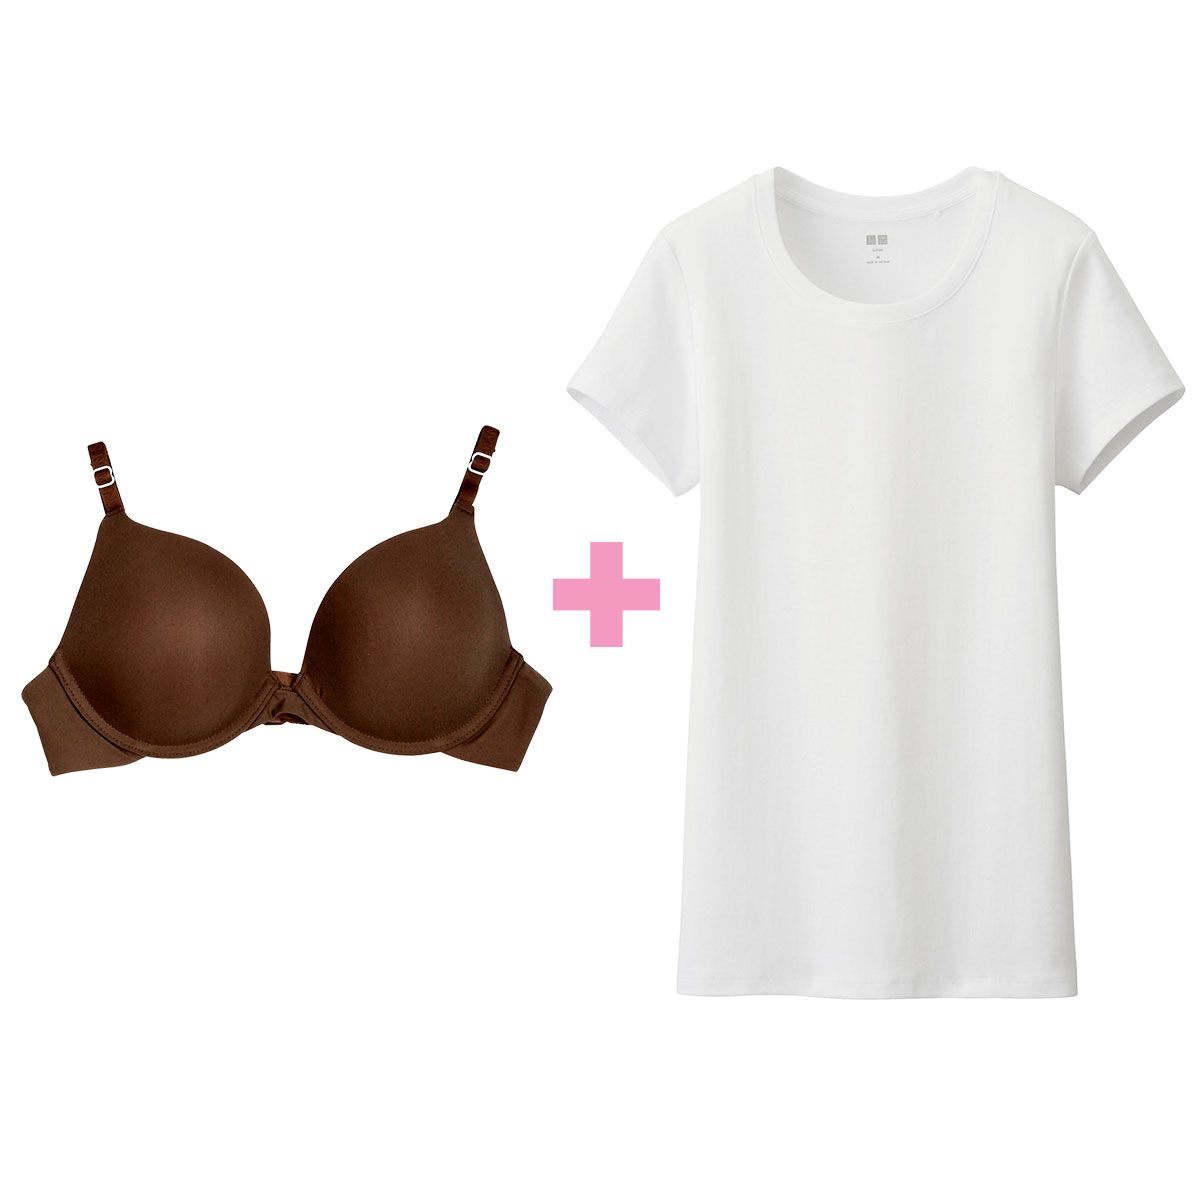 What colour bra should I wear under white?